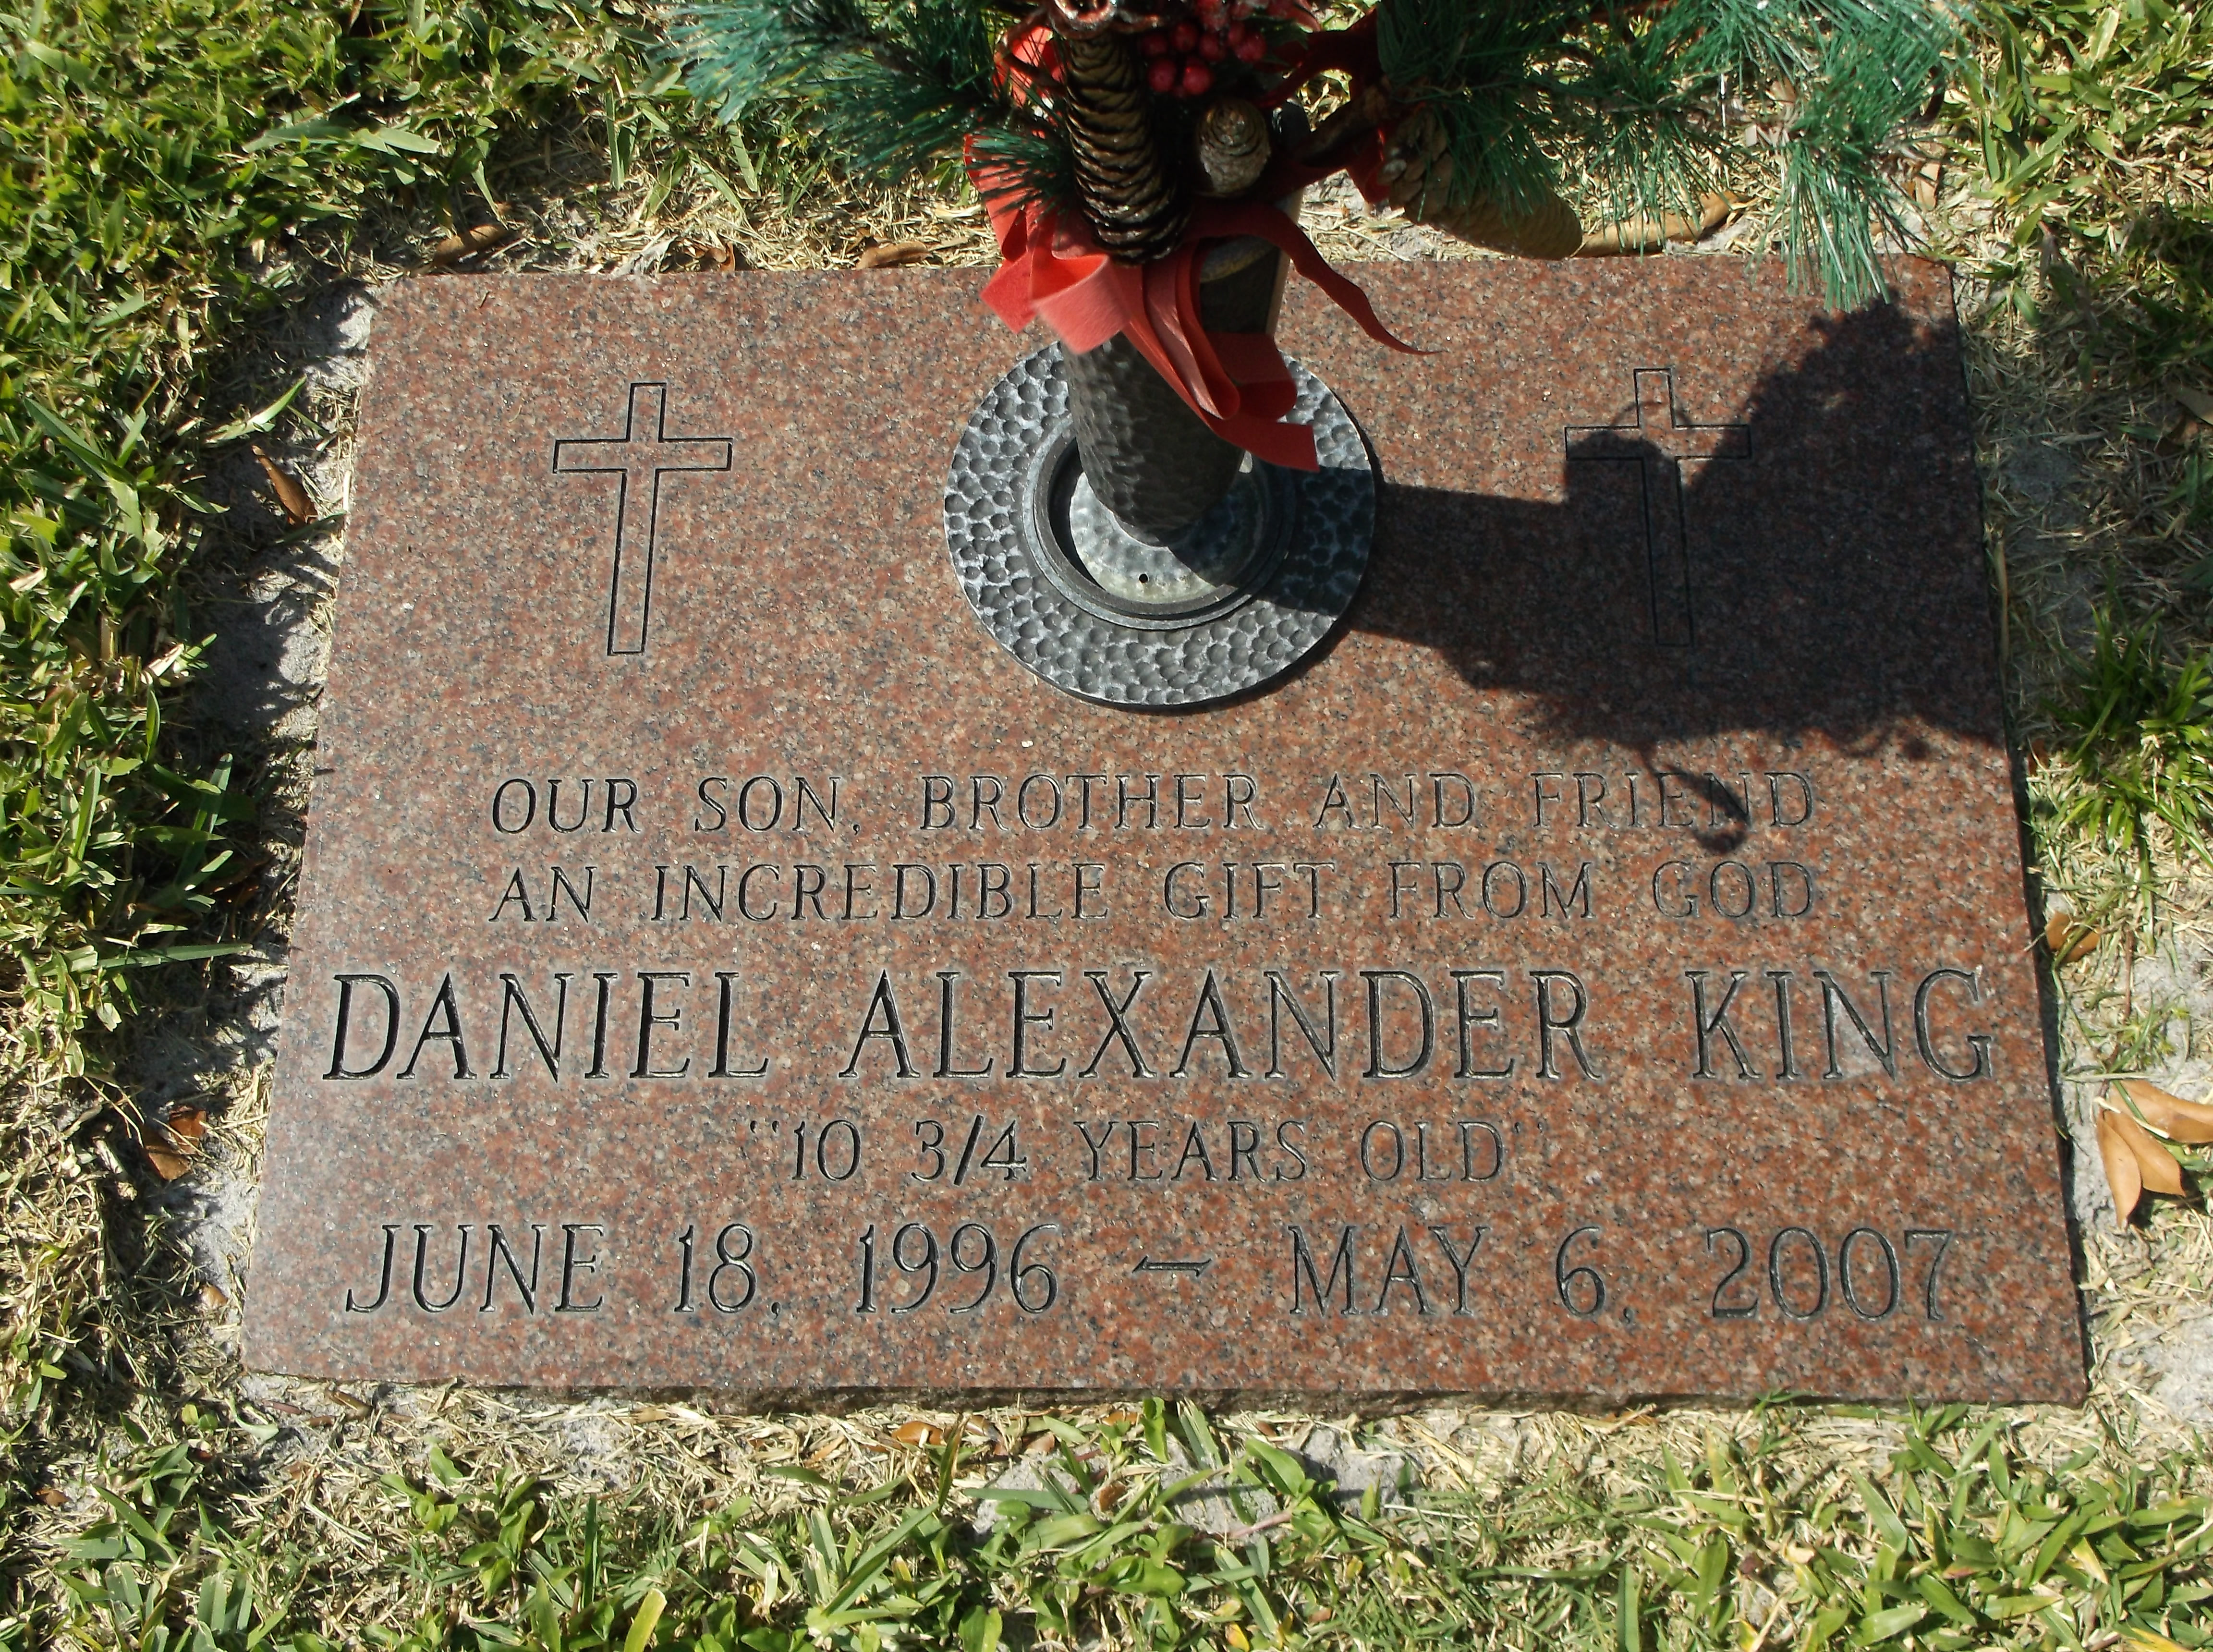 Daniel Alexander King